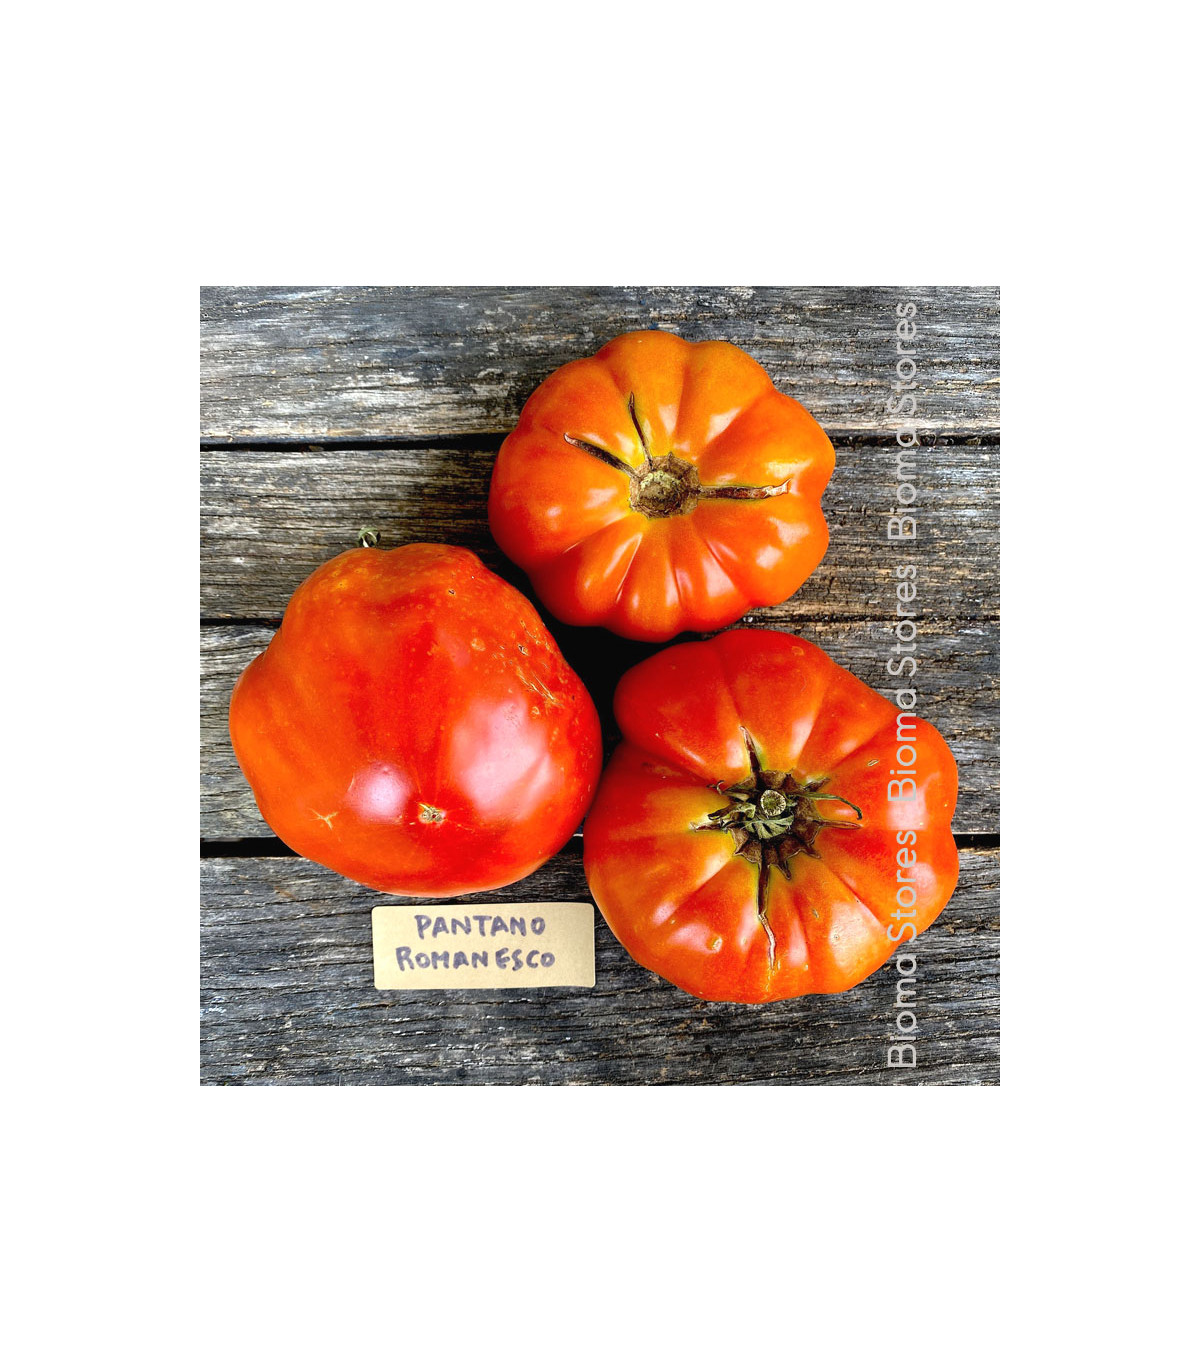 Paradajka Pantano Romanesco - Solanum lycopersicum - predaj semien - 7 ks